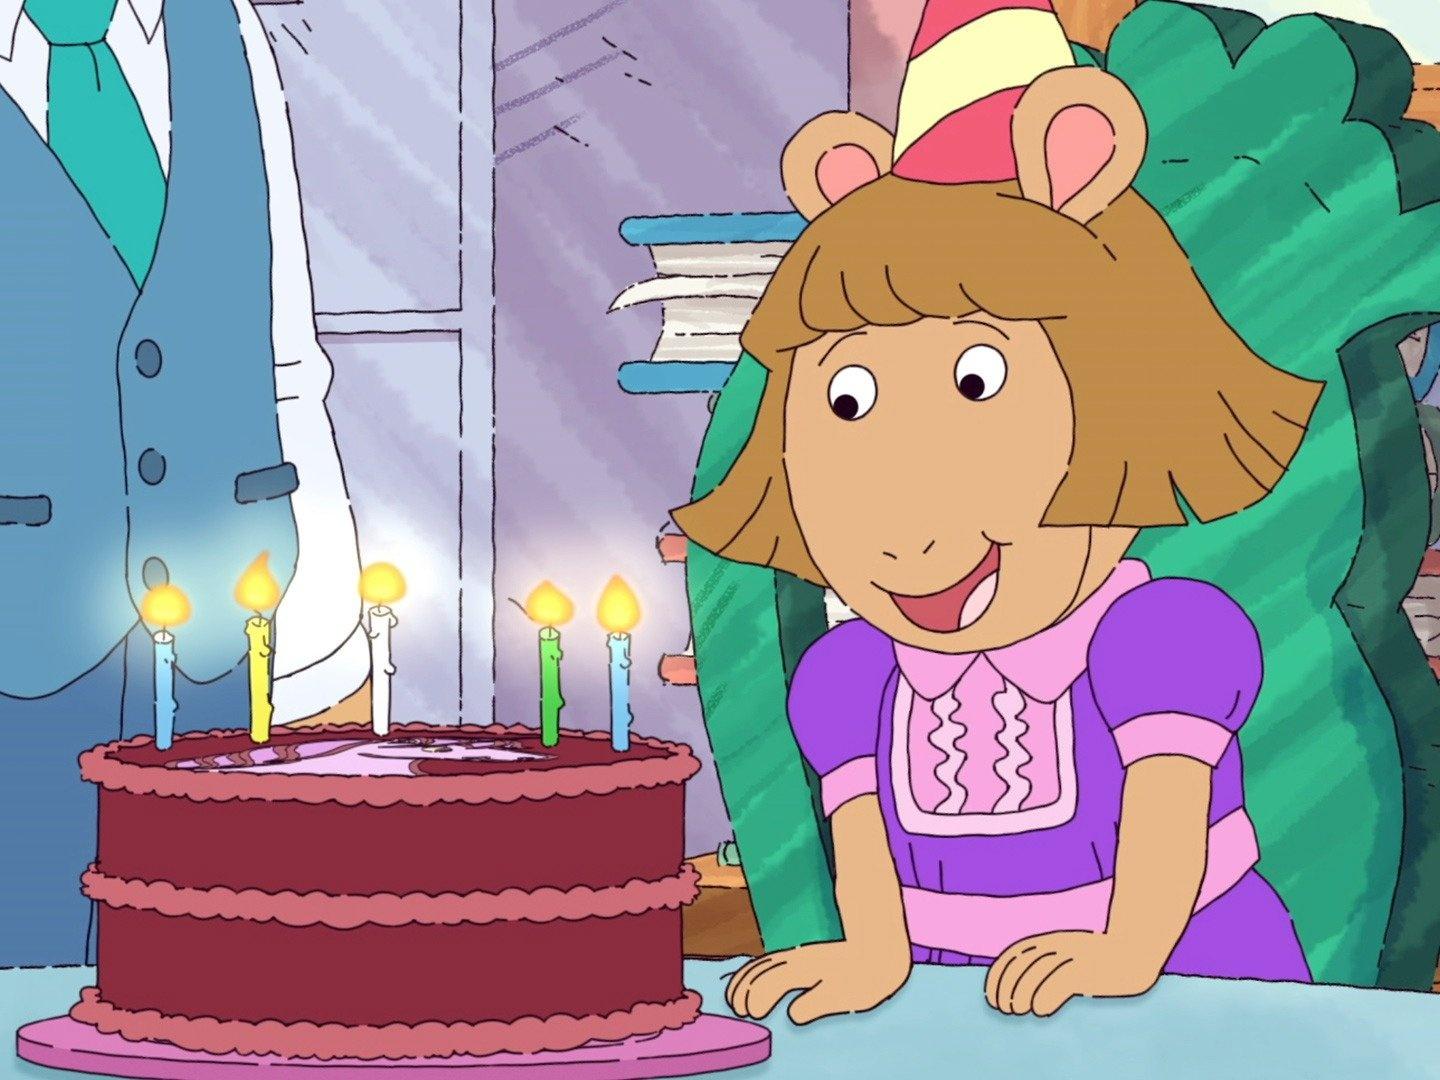 Arthur: D.W. and the Beastly Birthday.